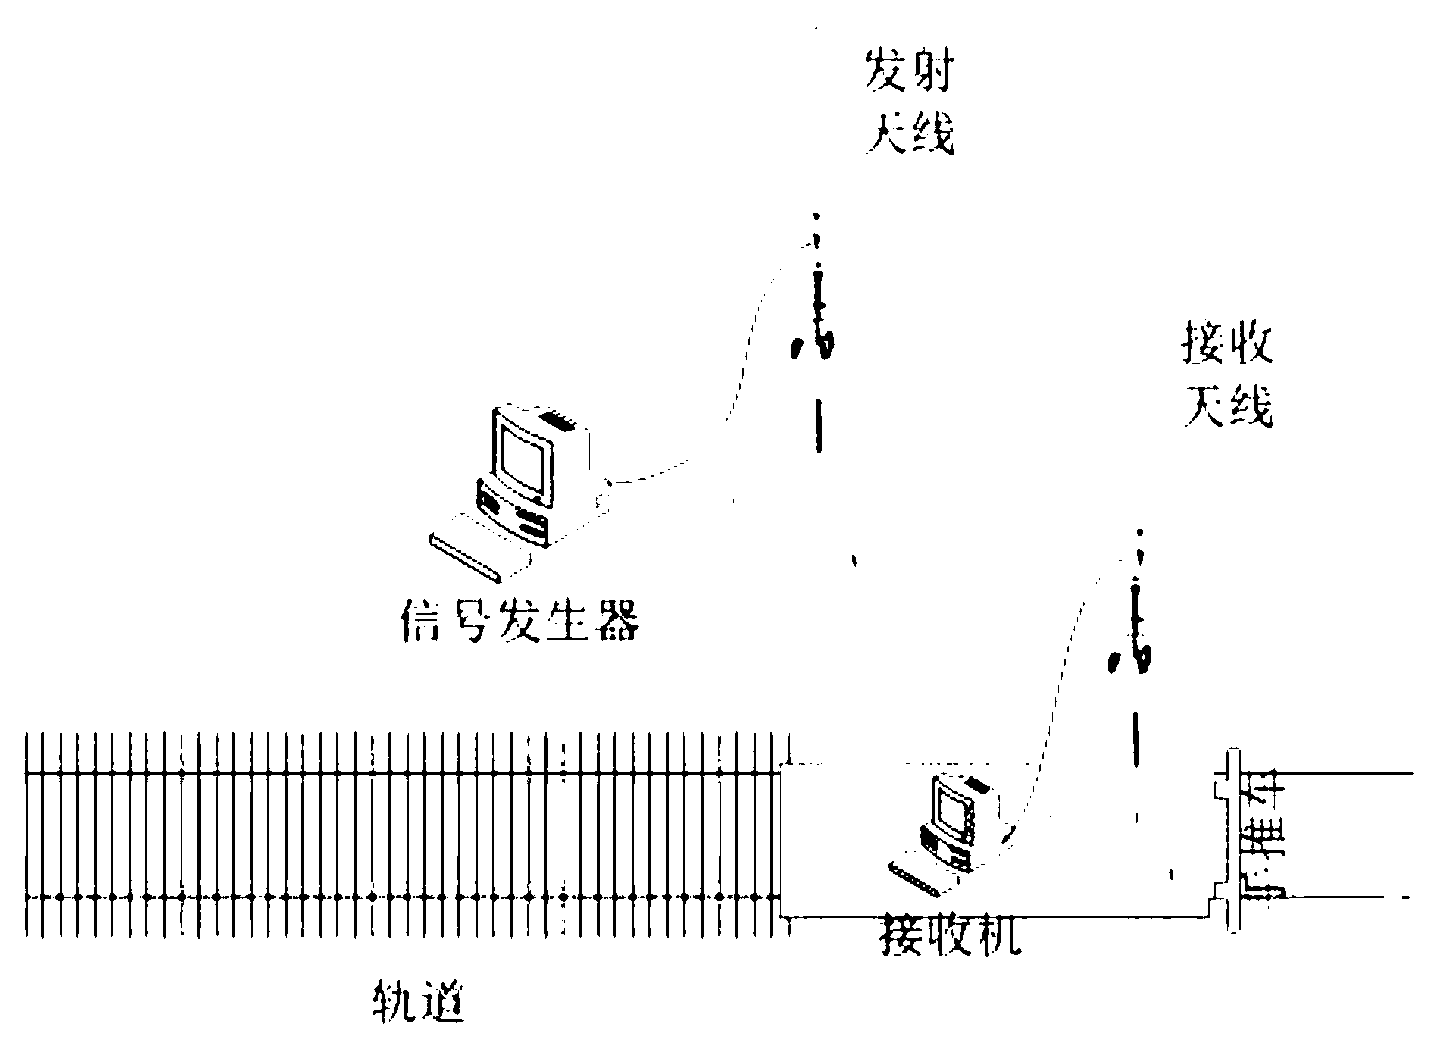 Arrival angle estimation method based on single antenna